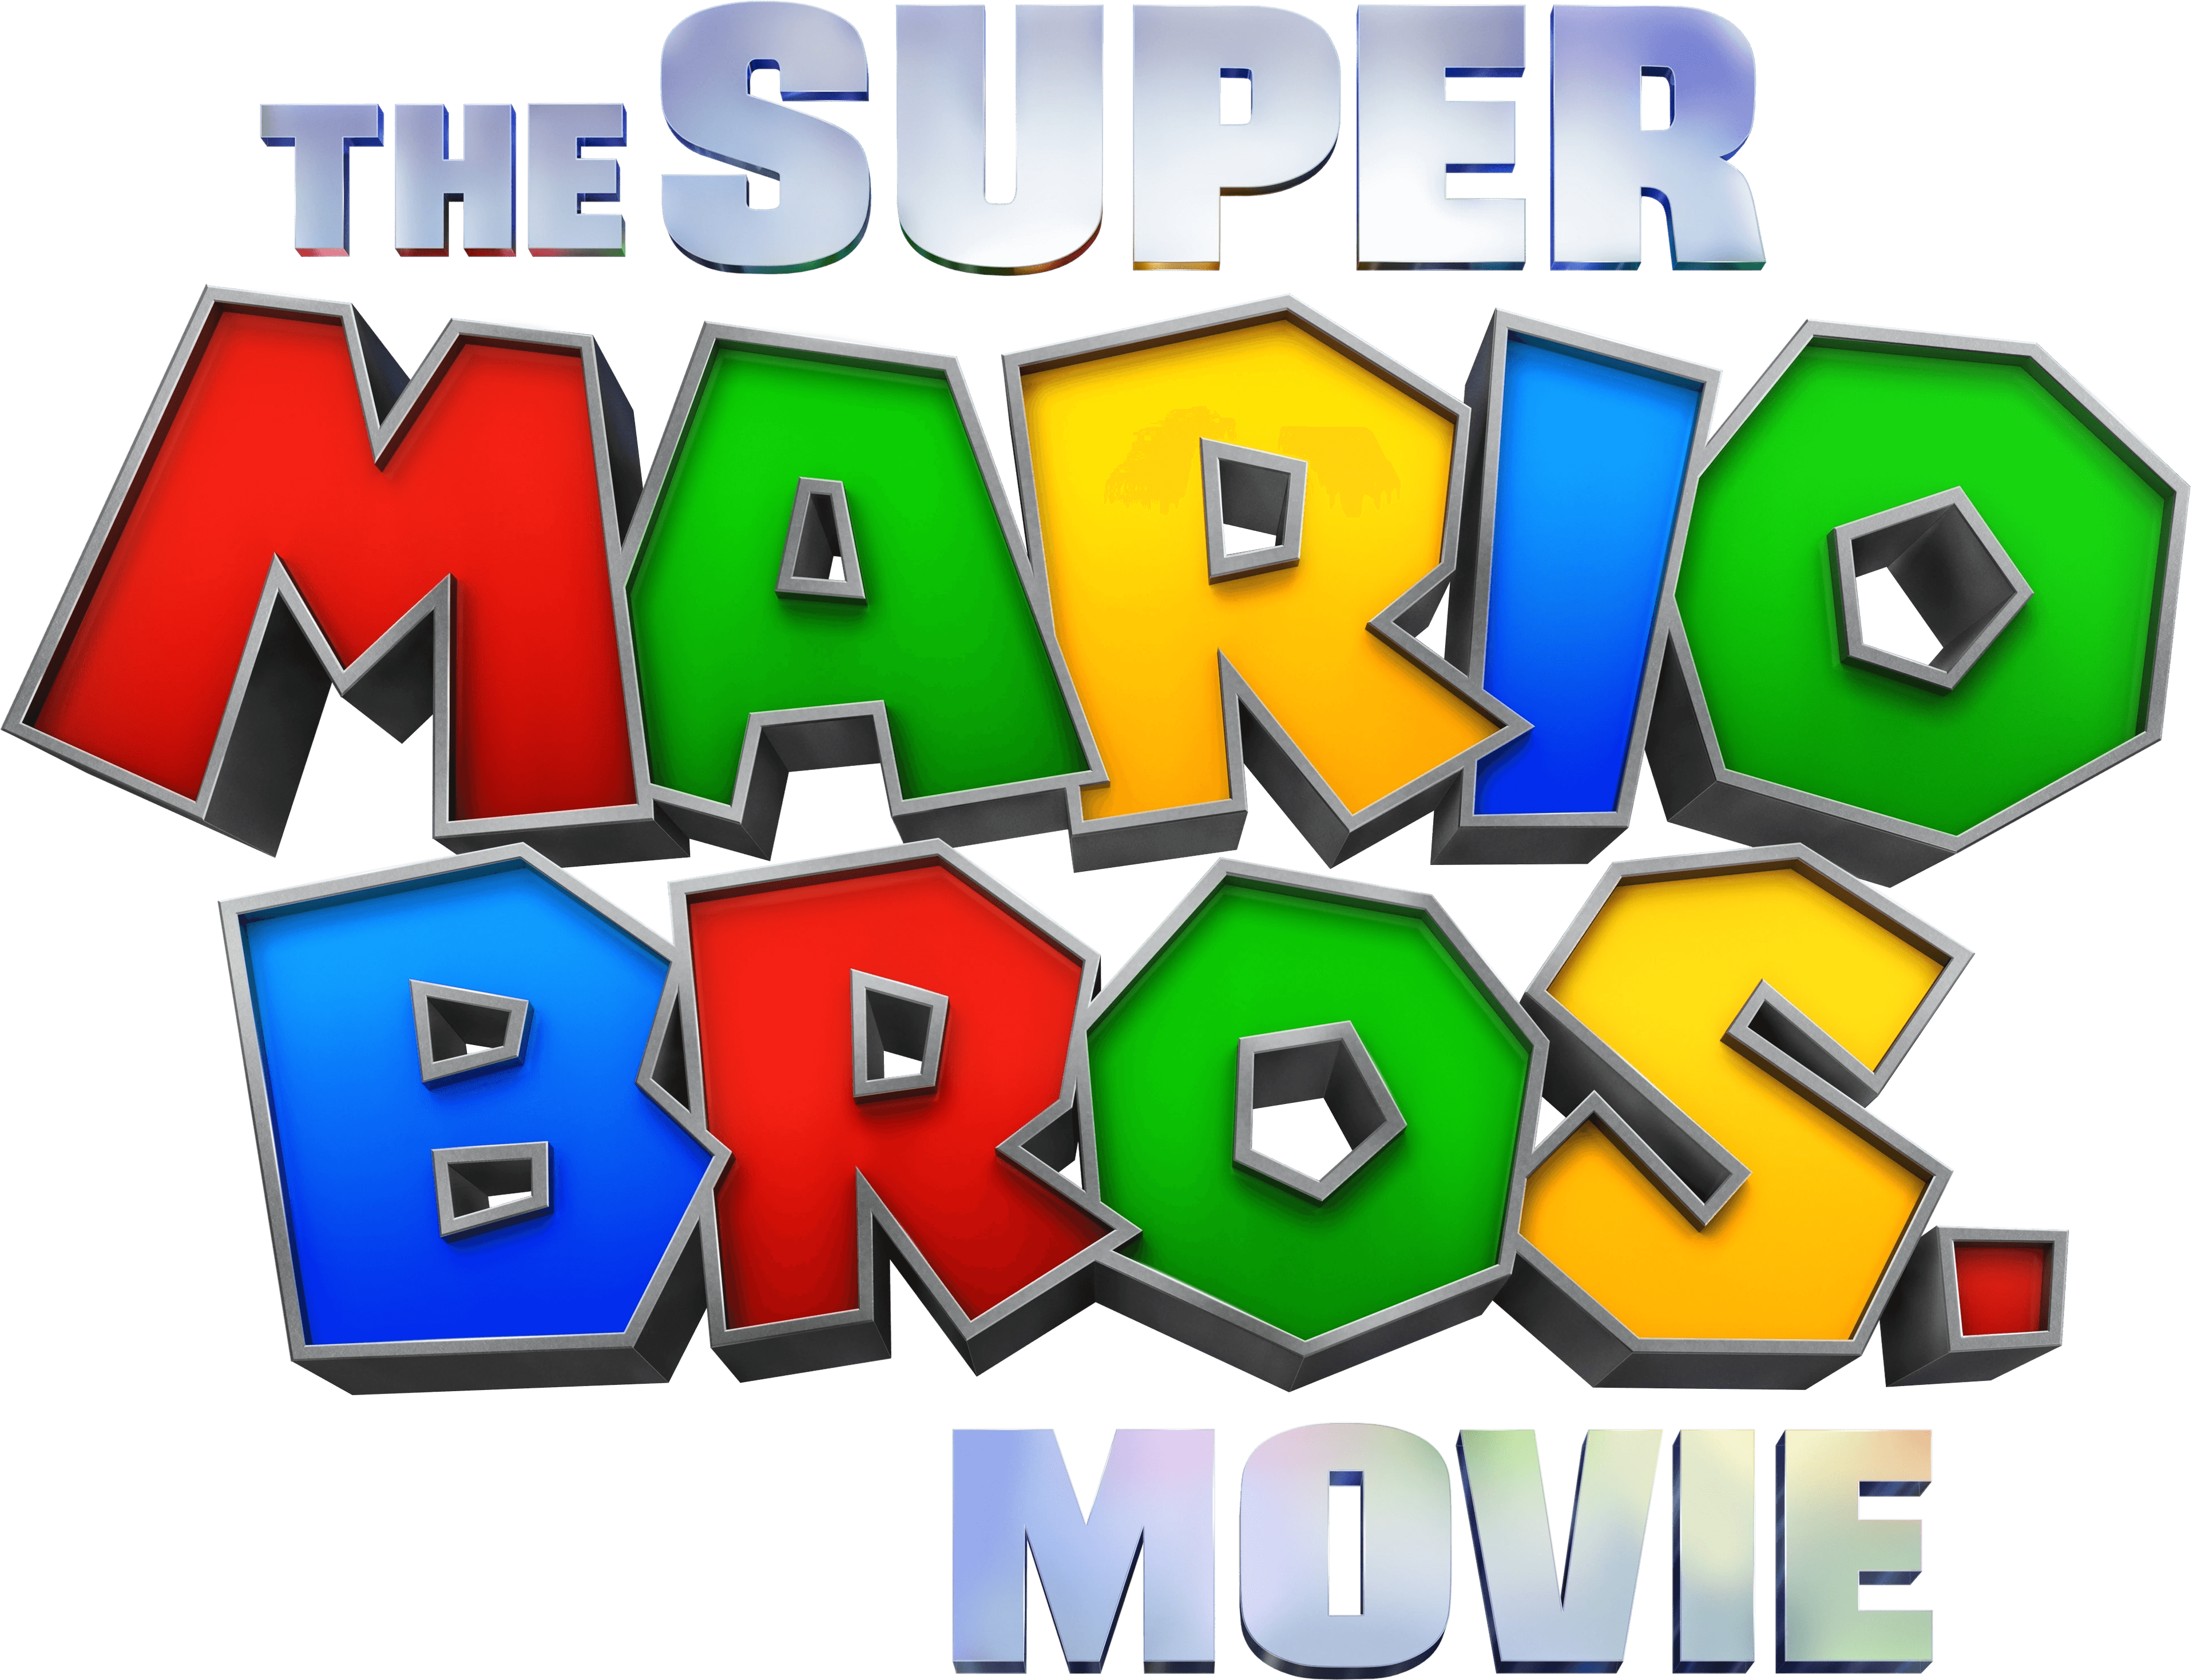 The Super Mario Bros. Movie logo